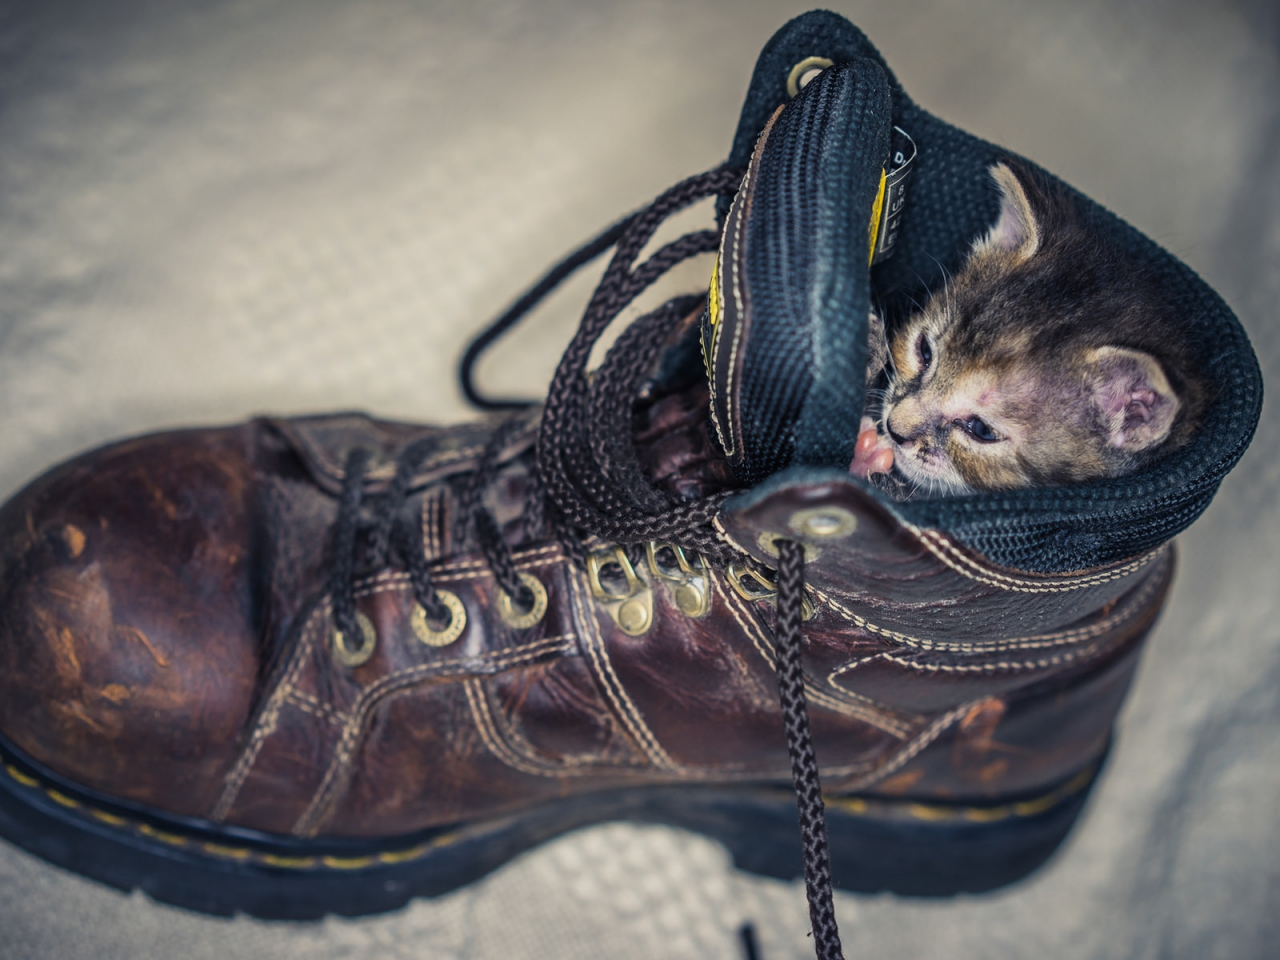 Kitten in Shoe for 1280 x 960 resolution